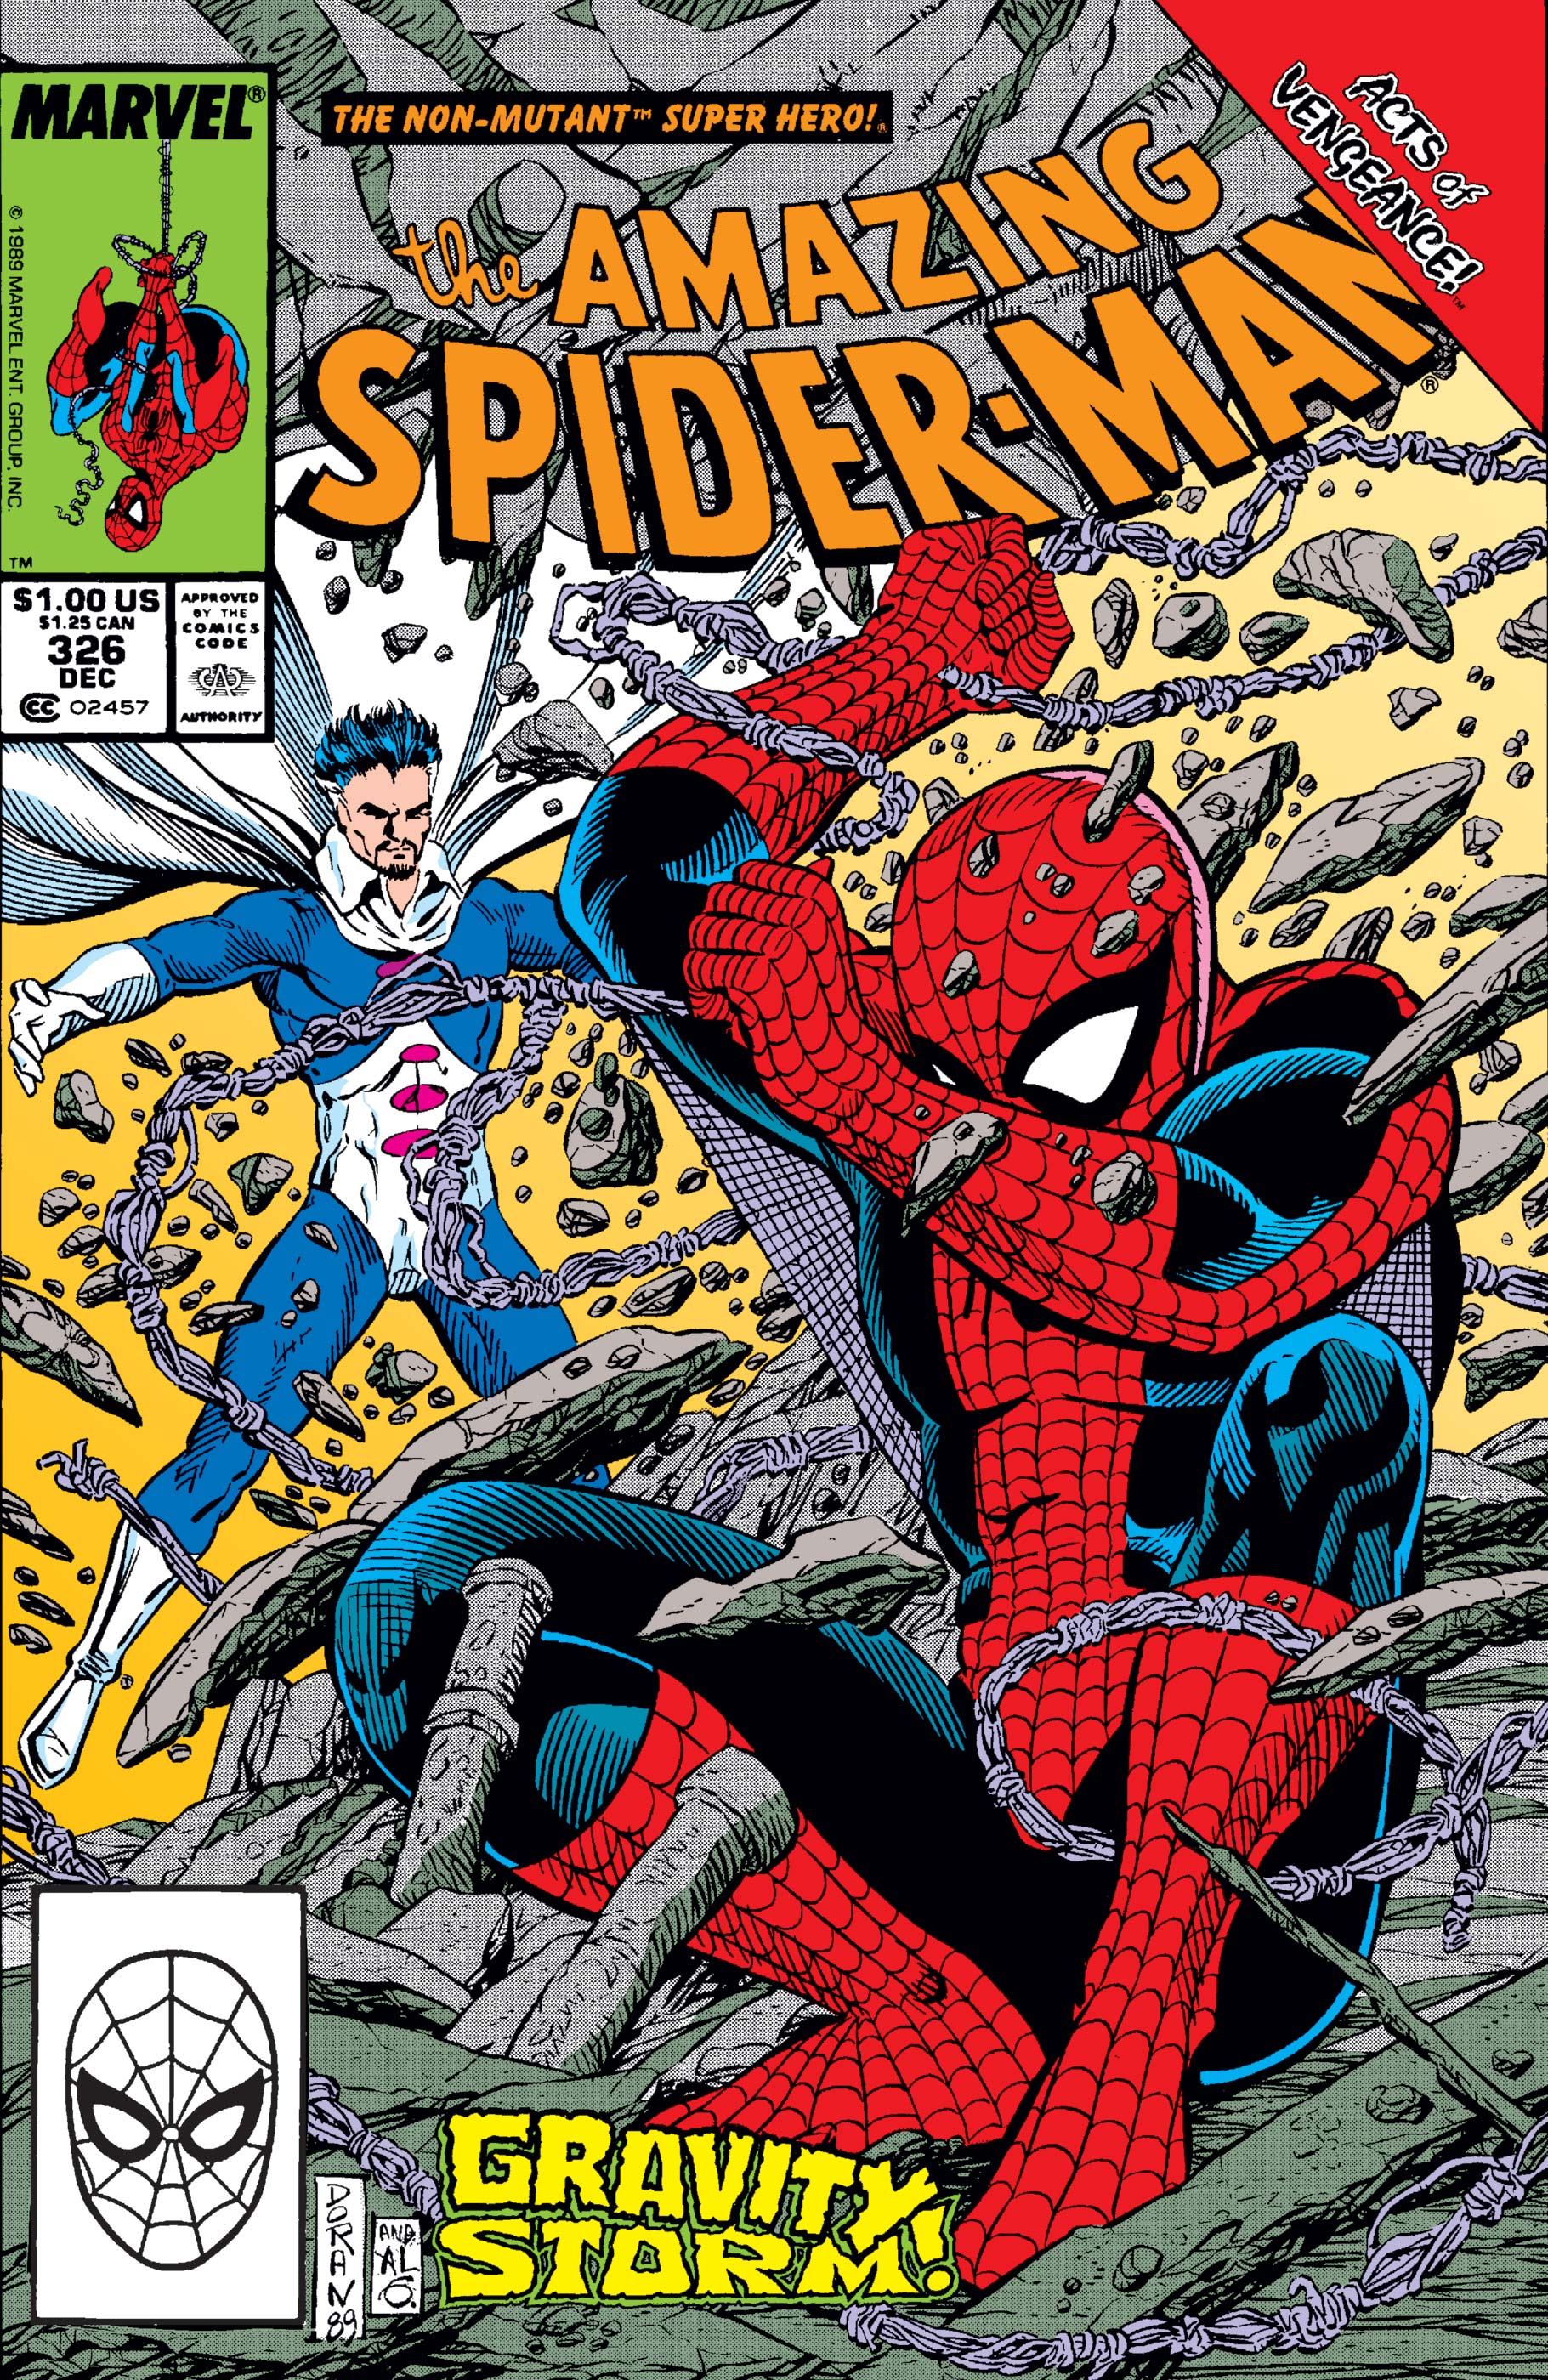 The Amazing Spider-Man (1963) #326 | Comics | Marvel.com